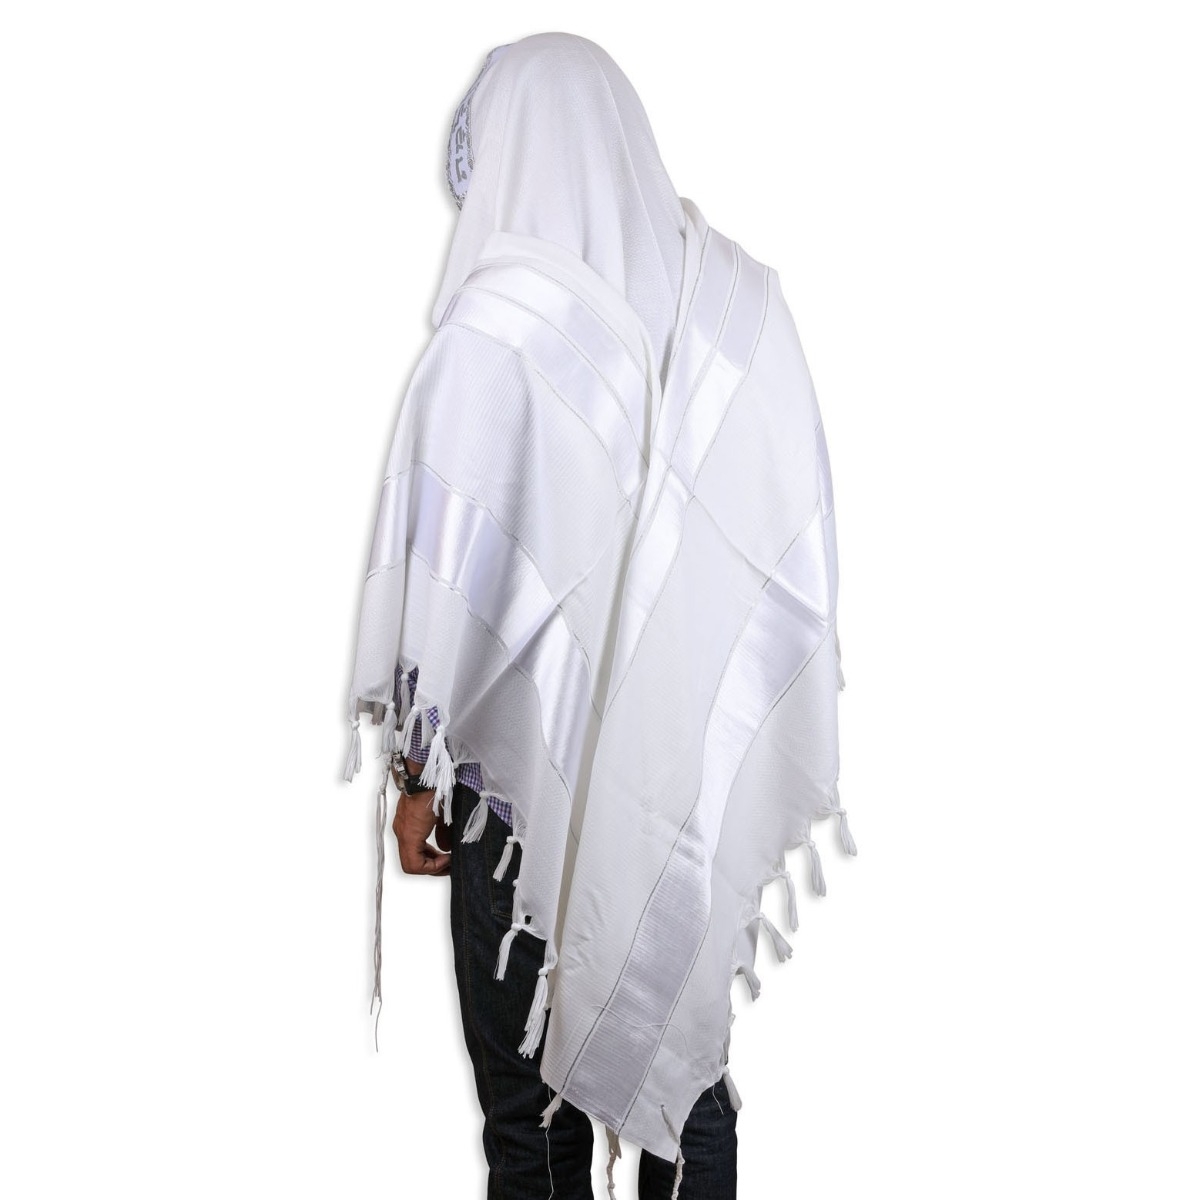 Talitnia Or Wool Blend Tallit Prayer Shawl (White and Silver) - 1